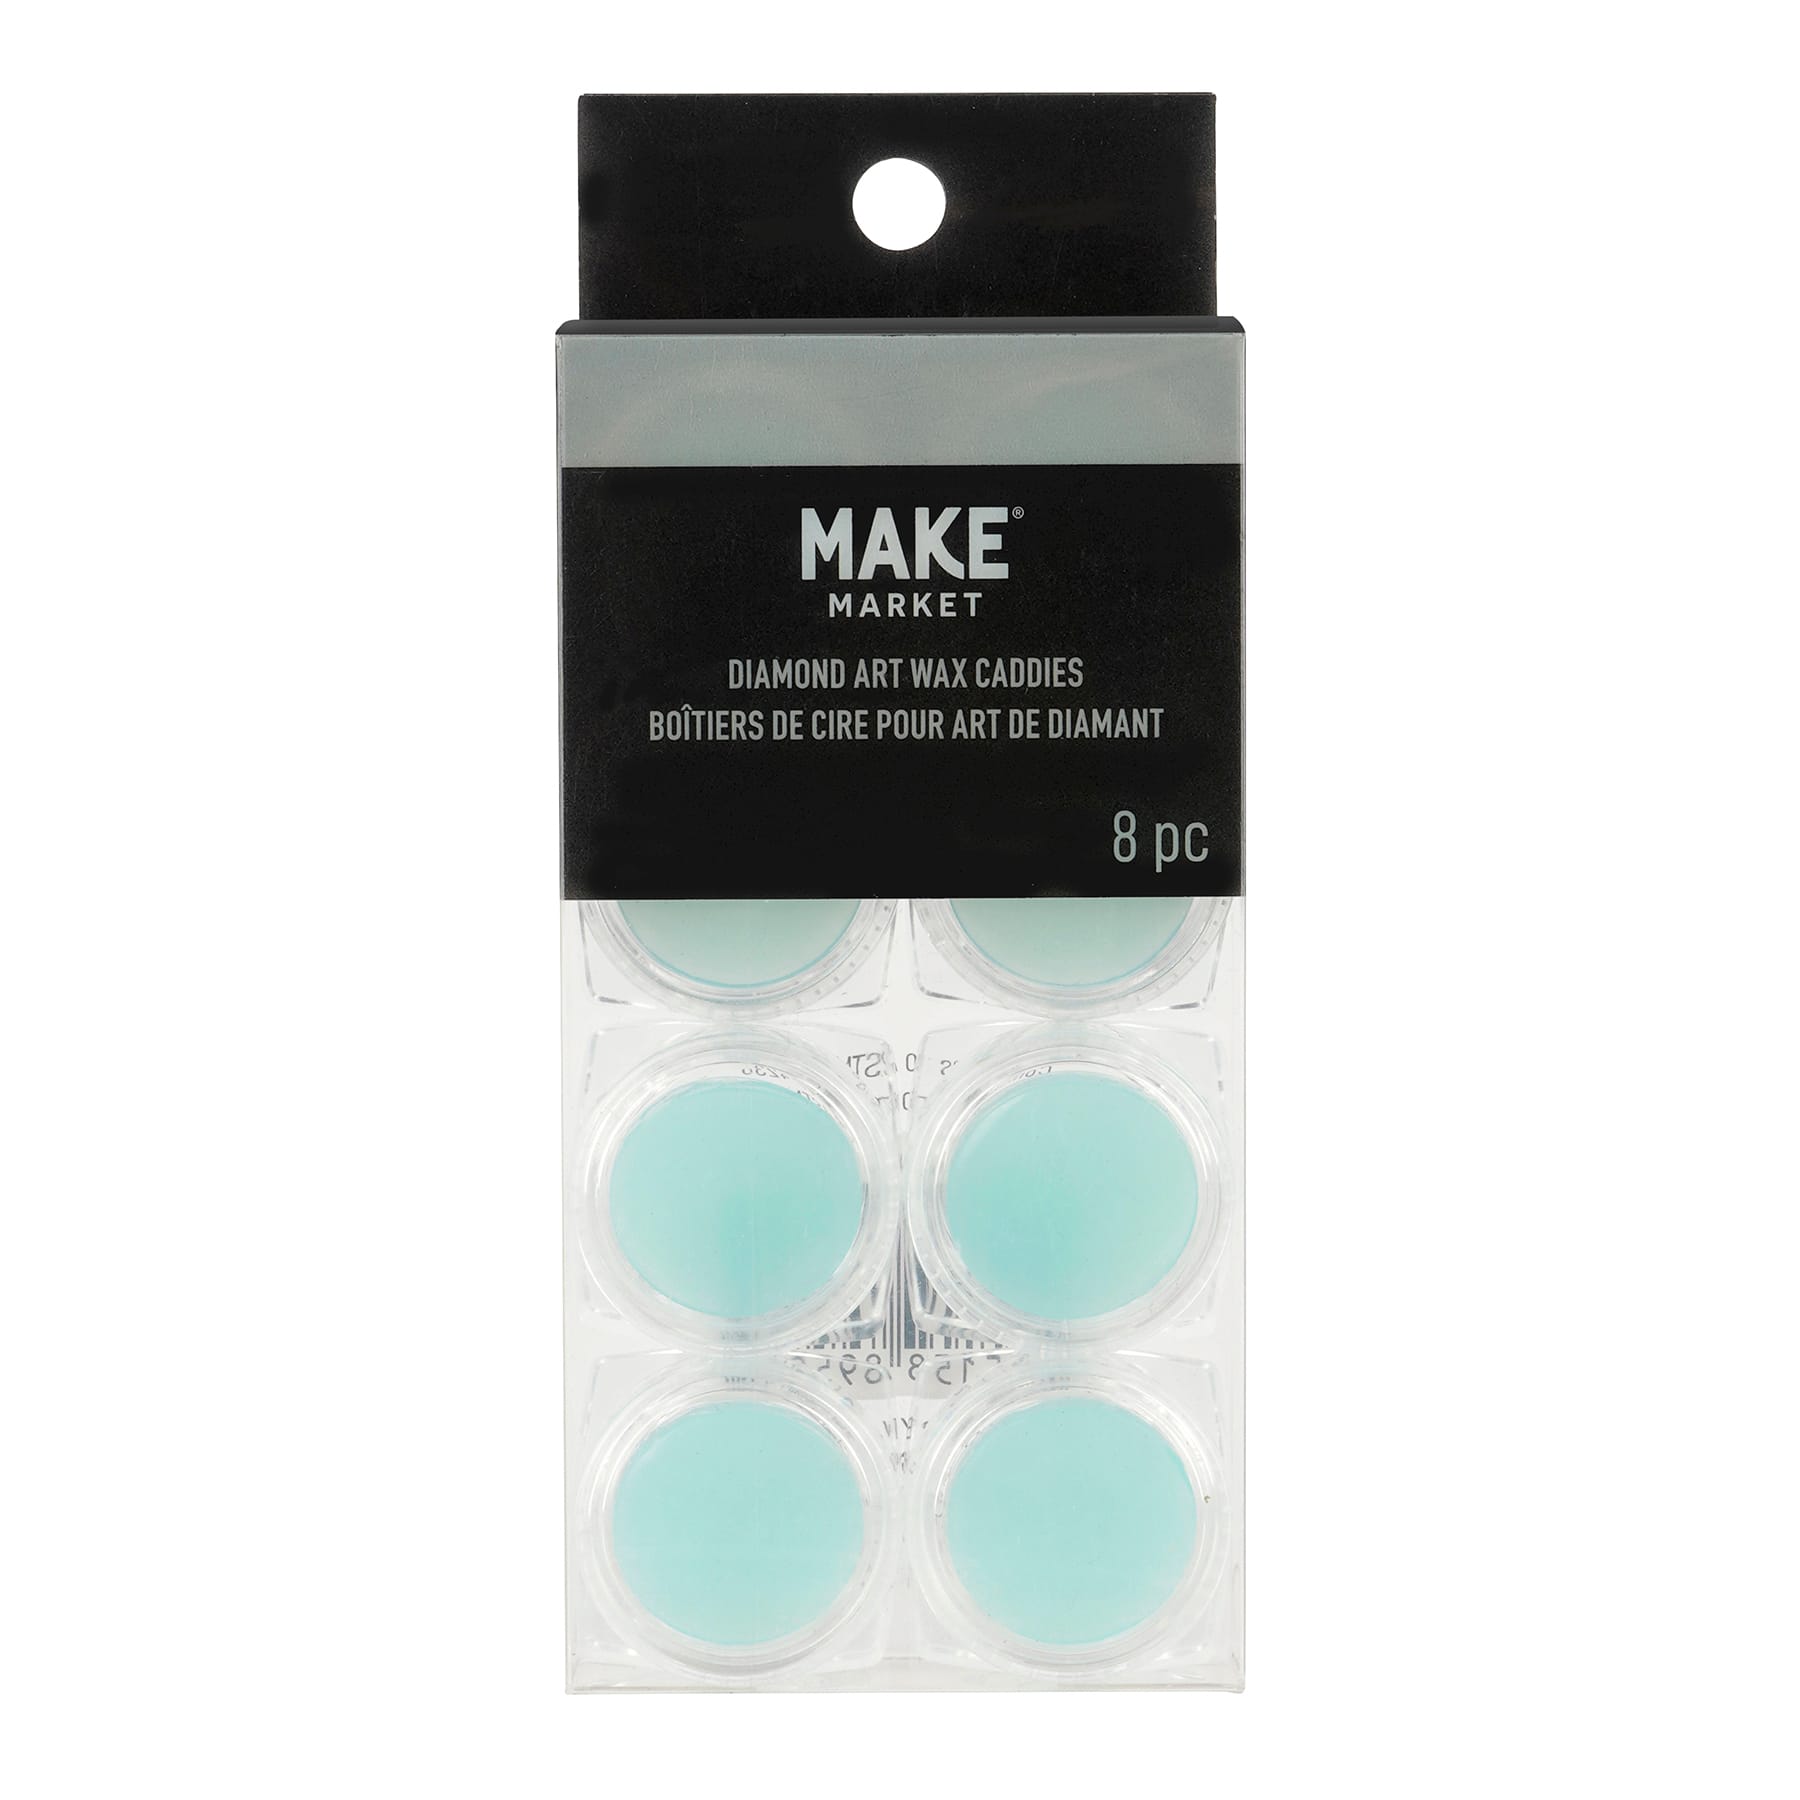 12 Packs: 8 ct. (96 total) Diamond Art Wax Caddies by Make Market®